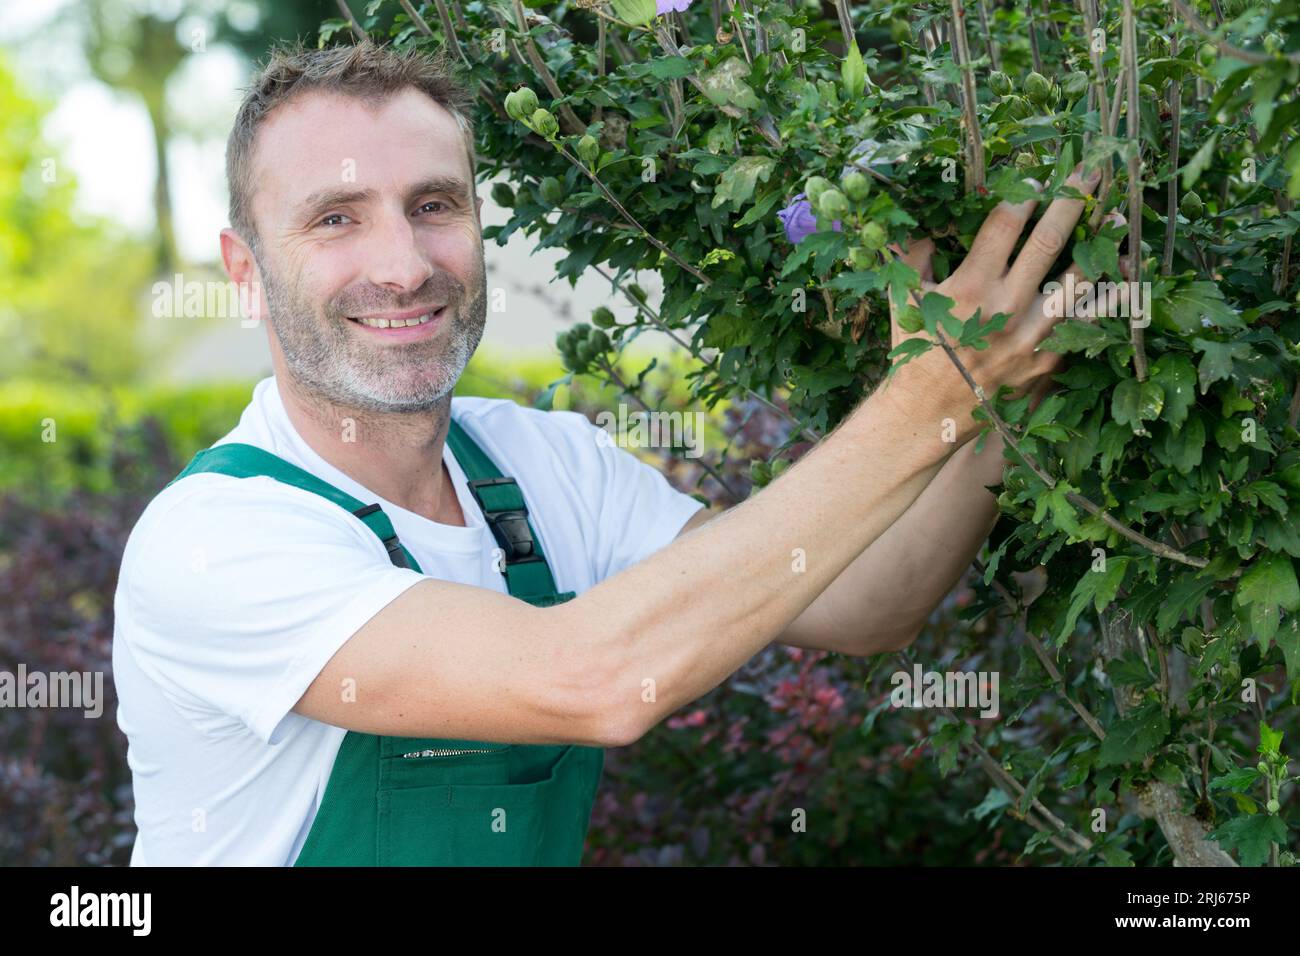 a man gardener at work Stock Photo